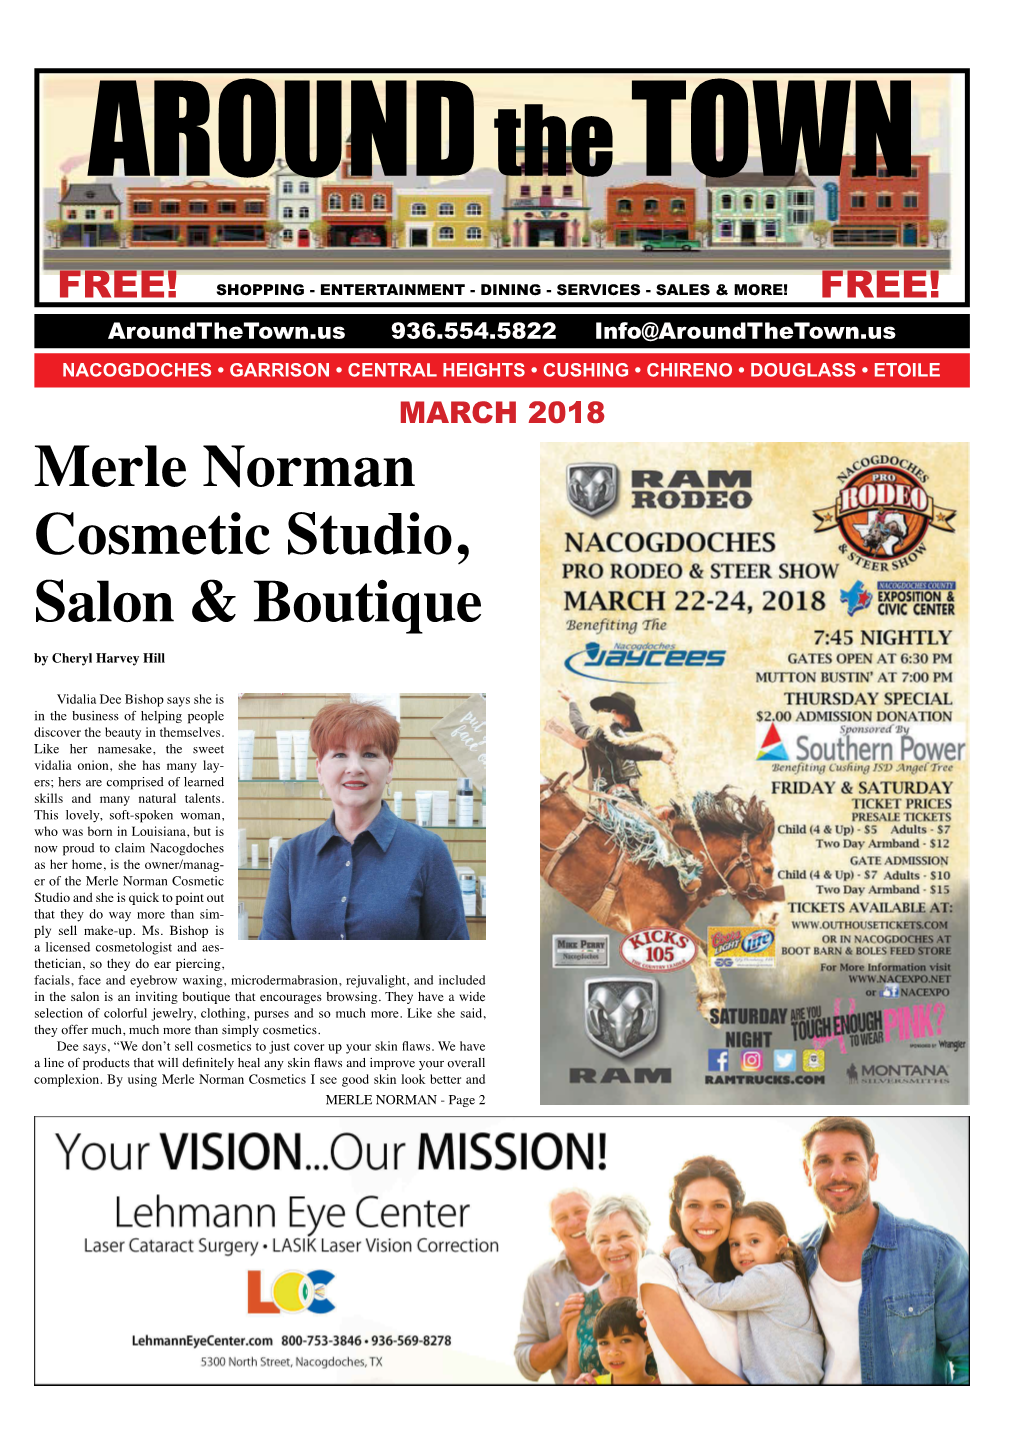 Merle Norman Cosmetic Studio, Salon & Boutique